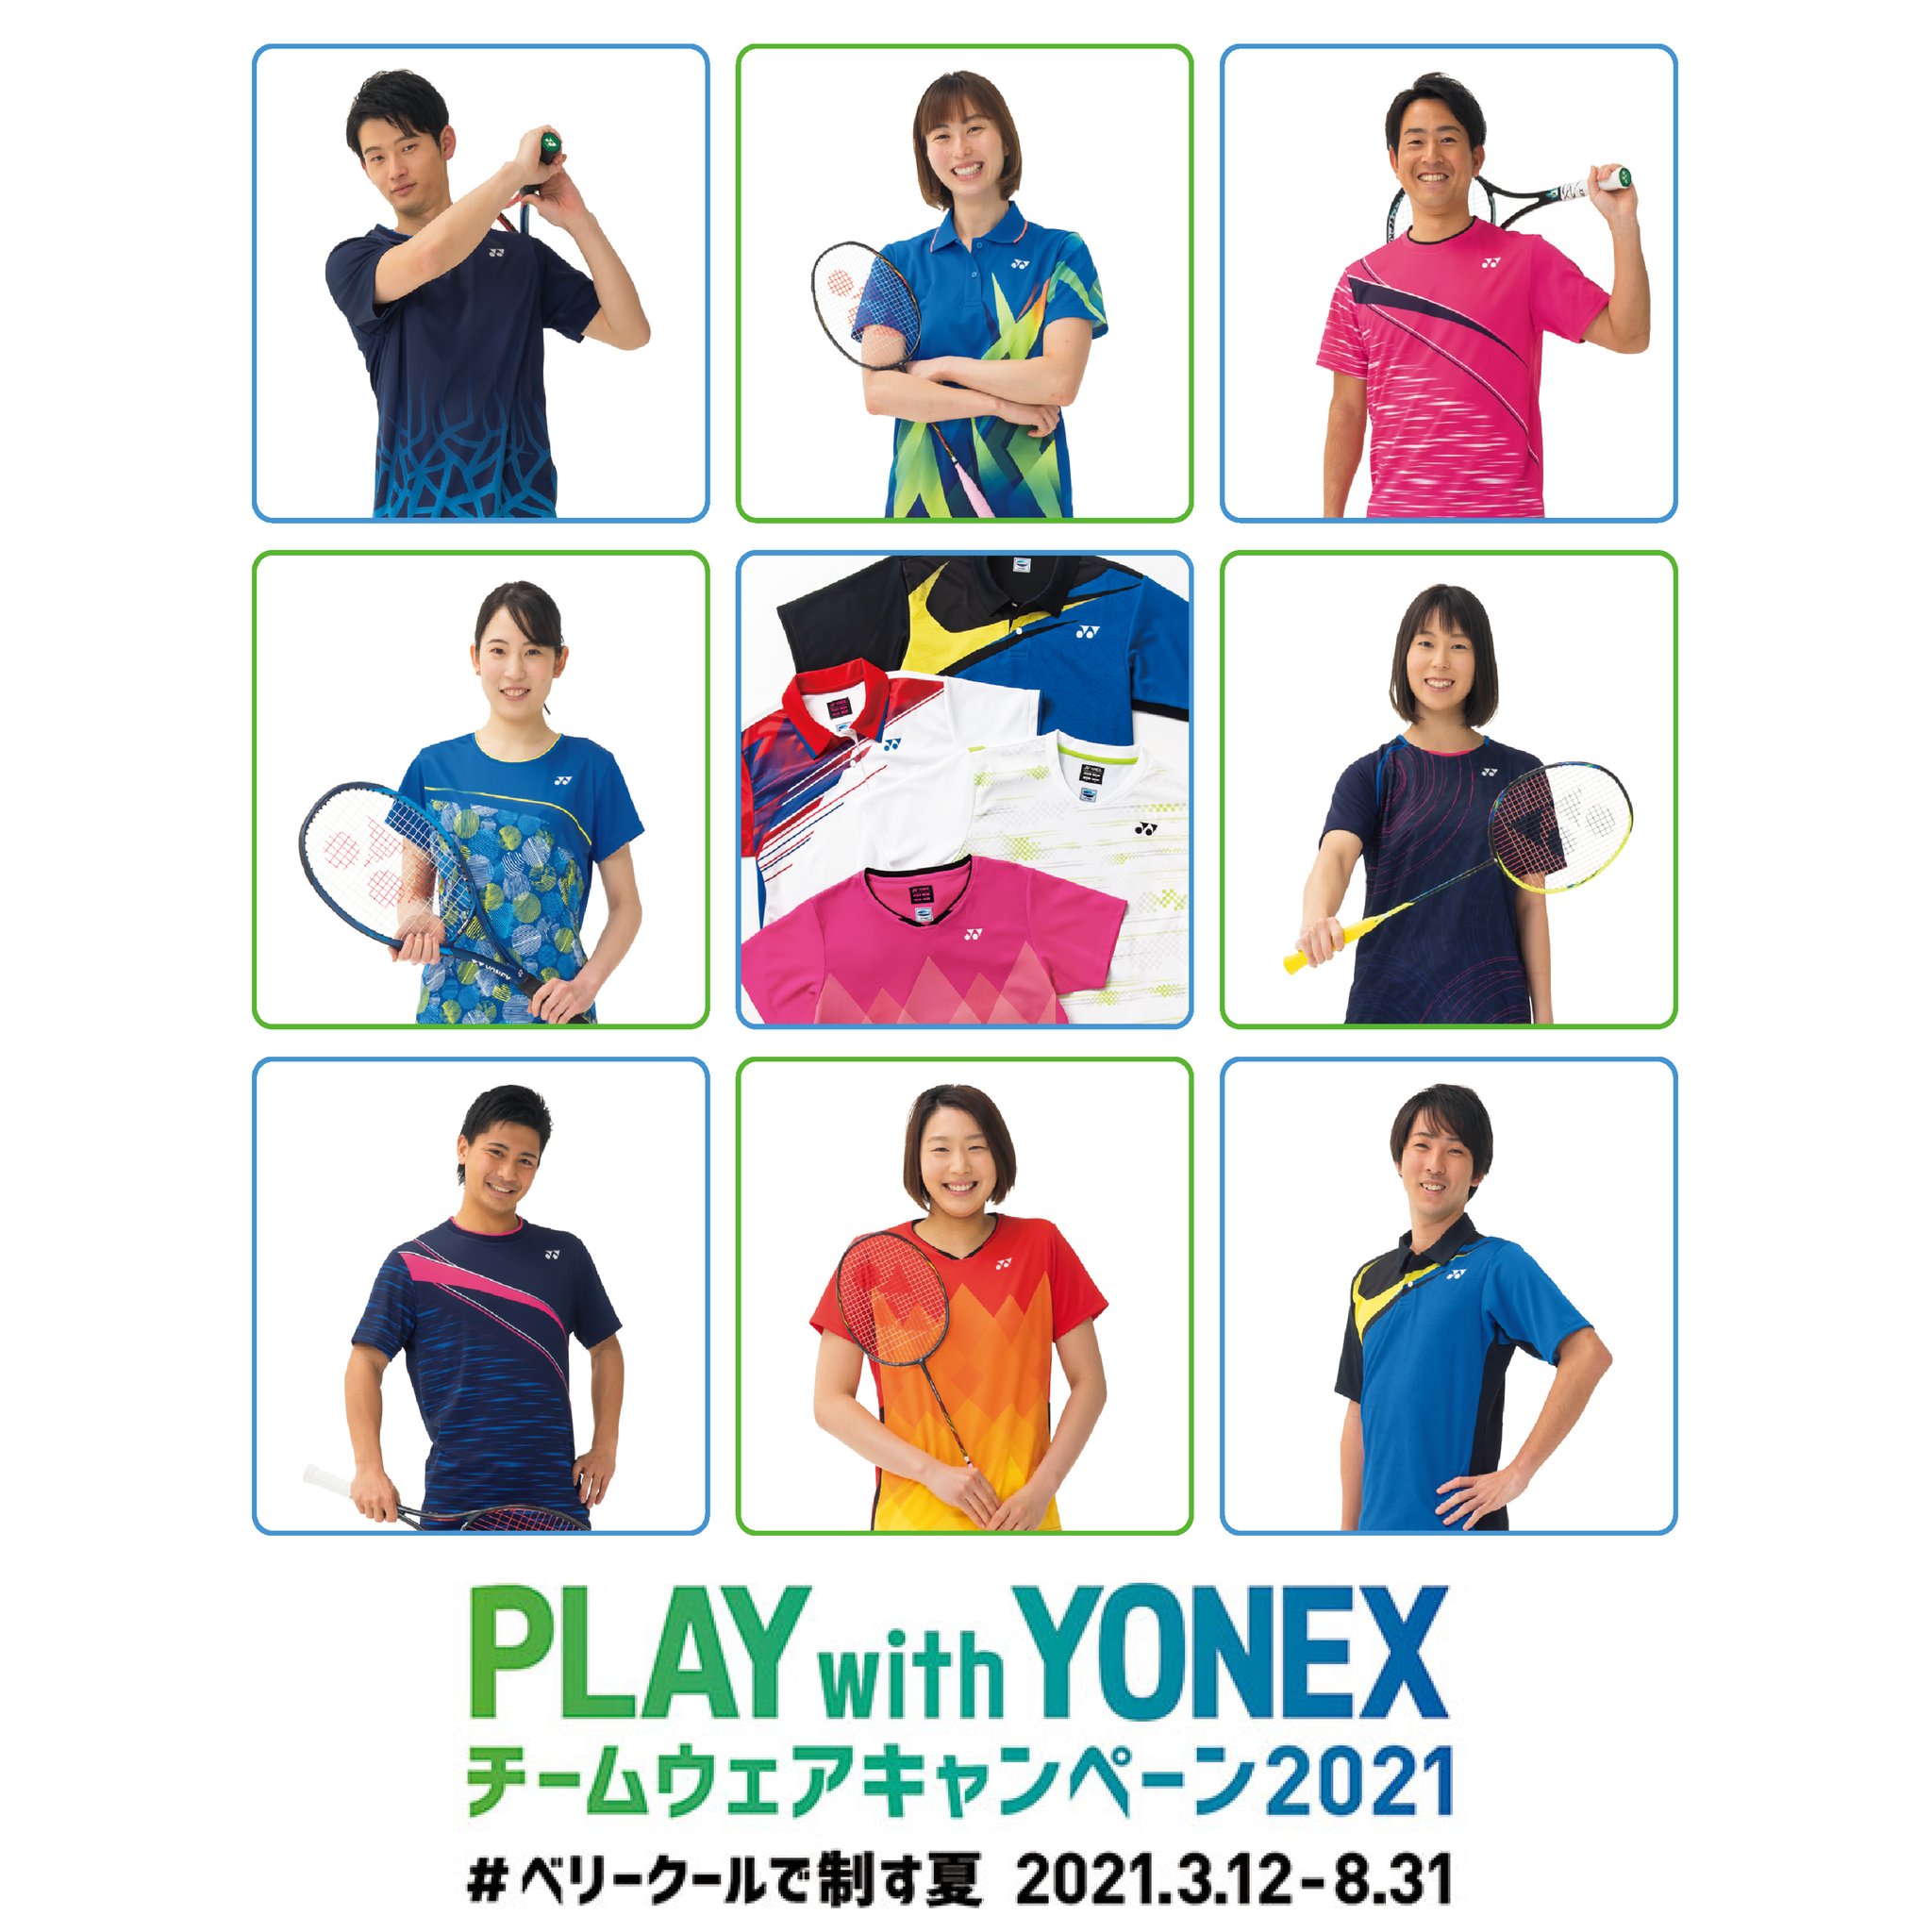 yonex.co.jp（ヨネックス株式会社） on Twitter: 